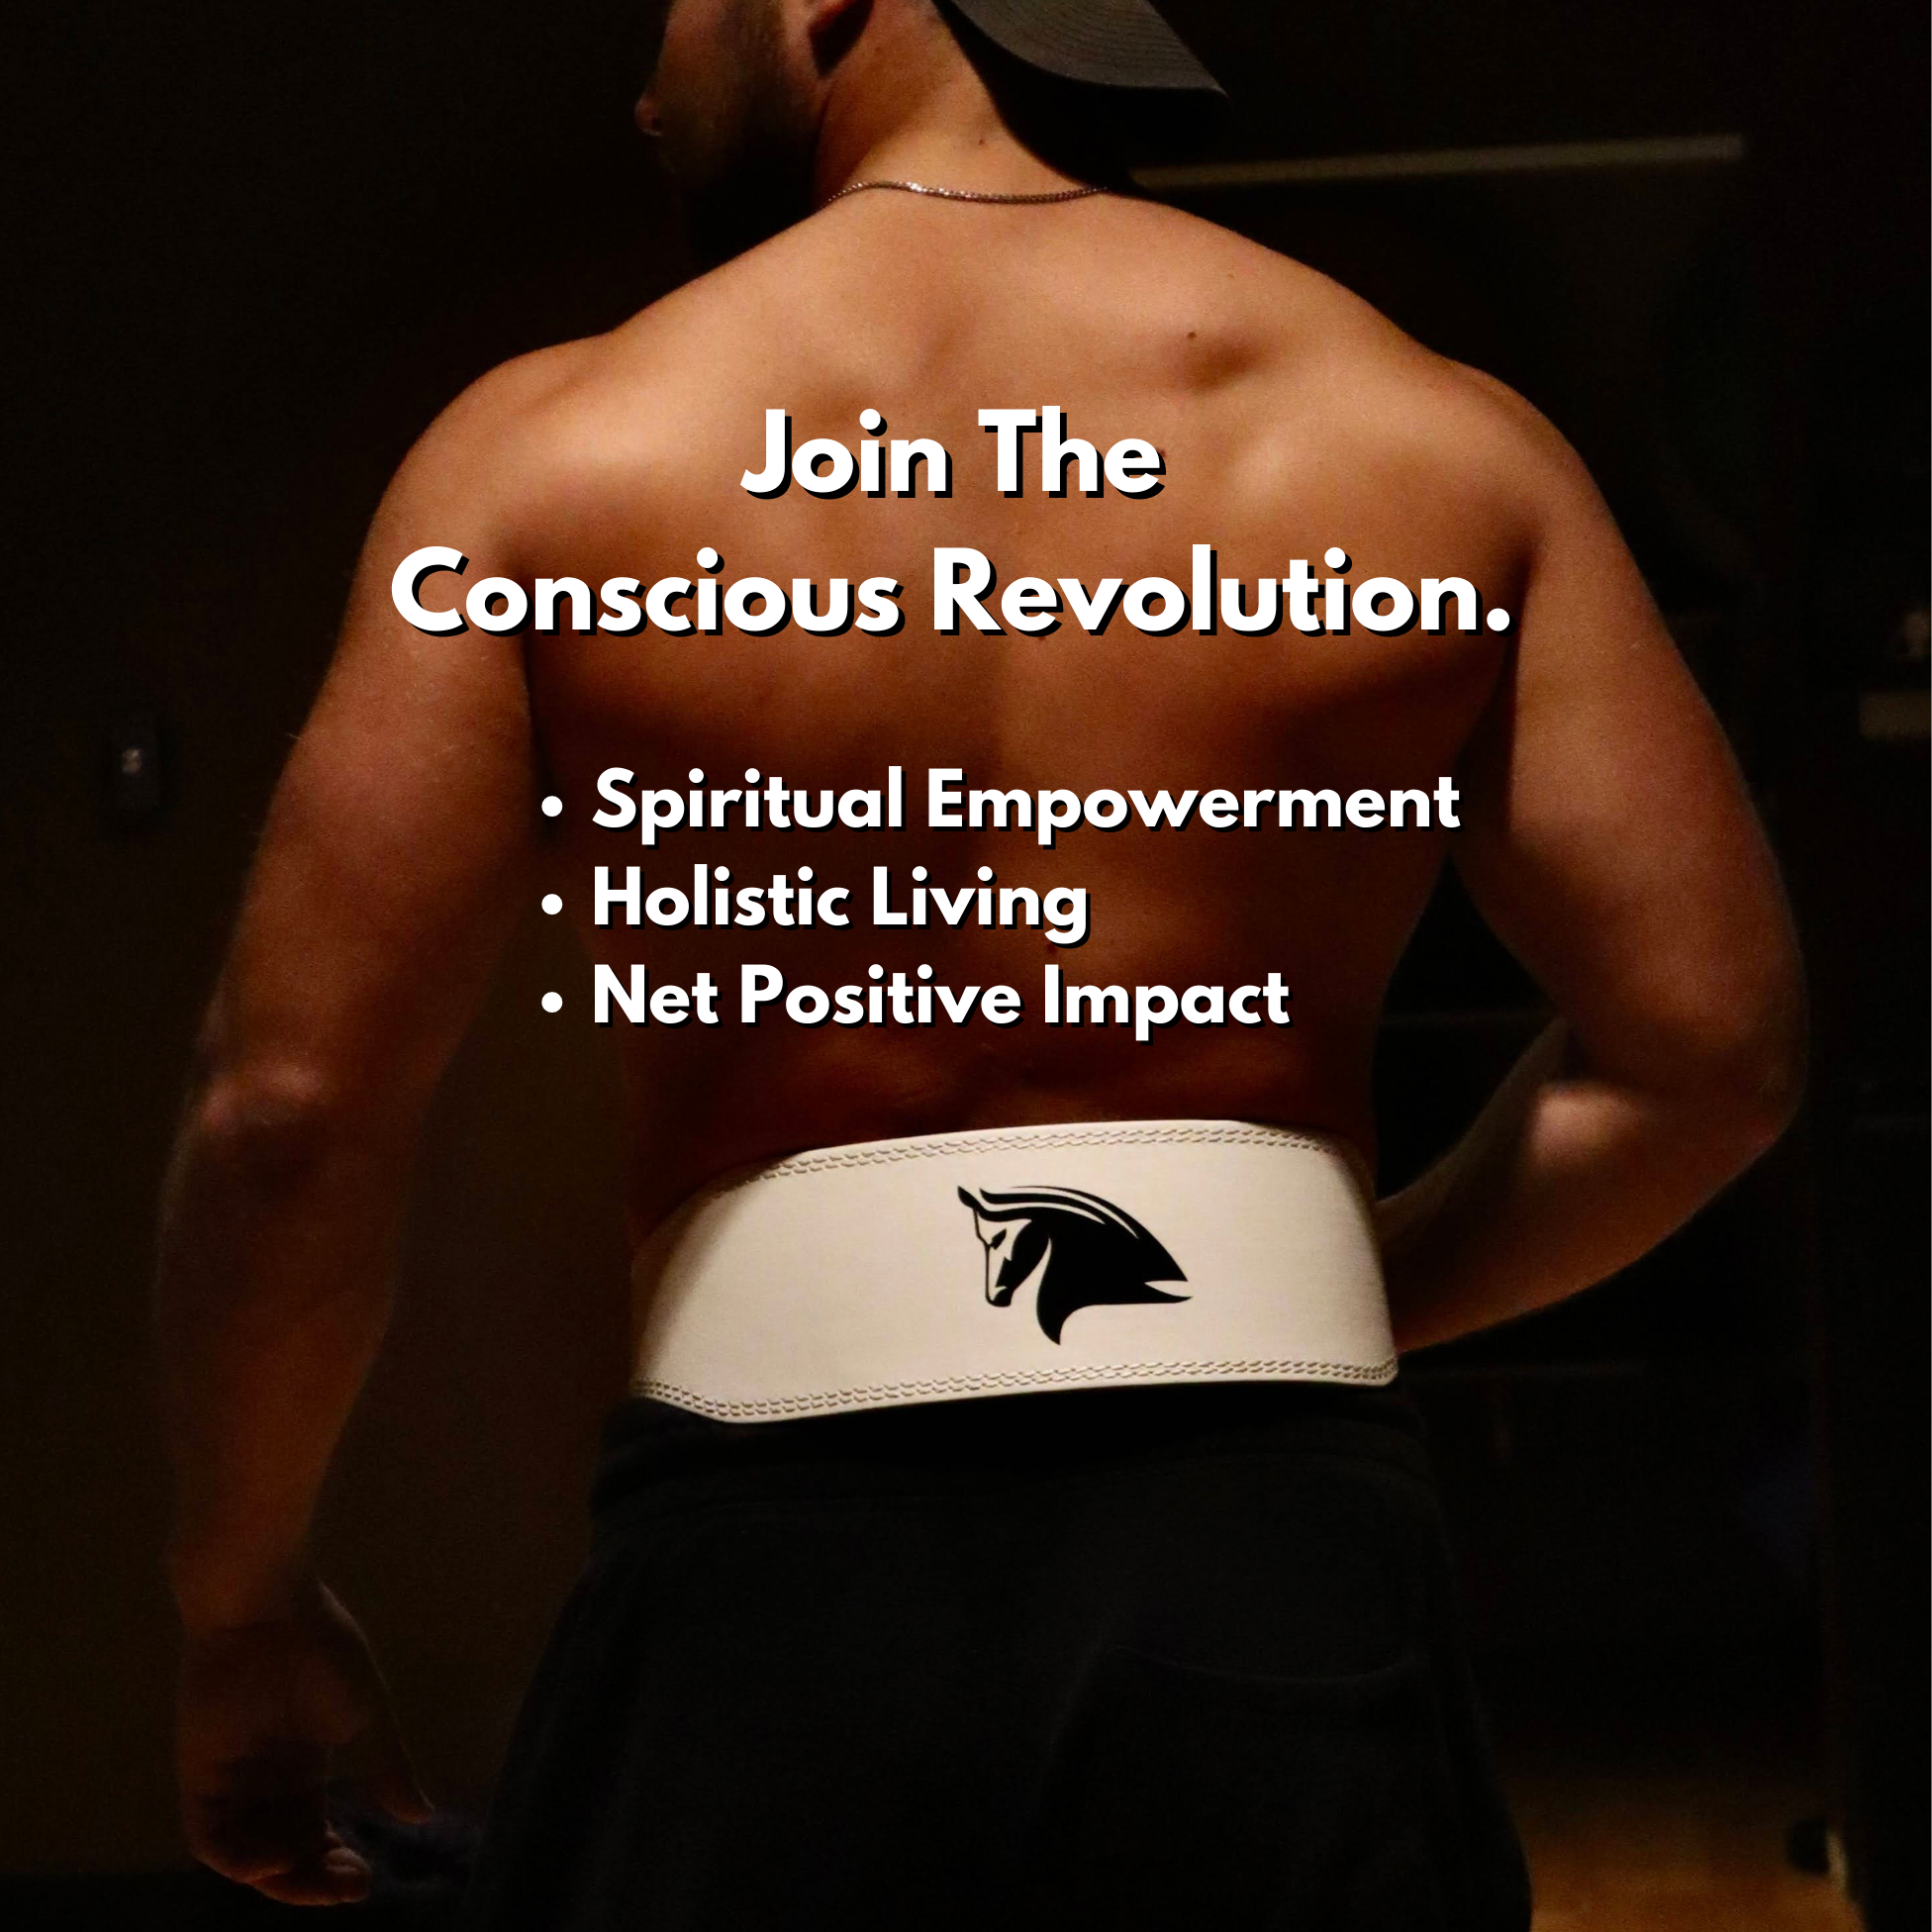 Join the Conscious Revolution - spiritual empowerment, holistic living, net positive impact